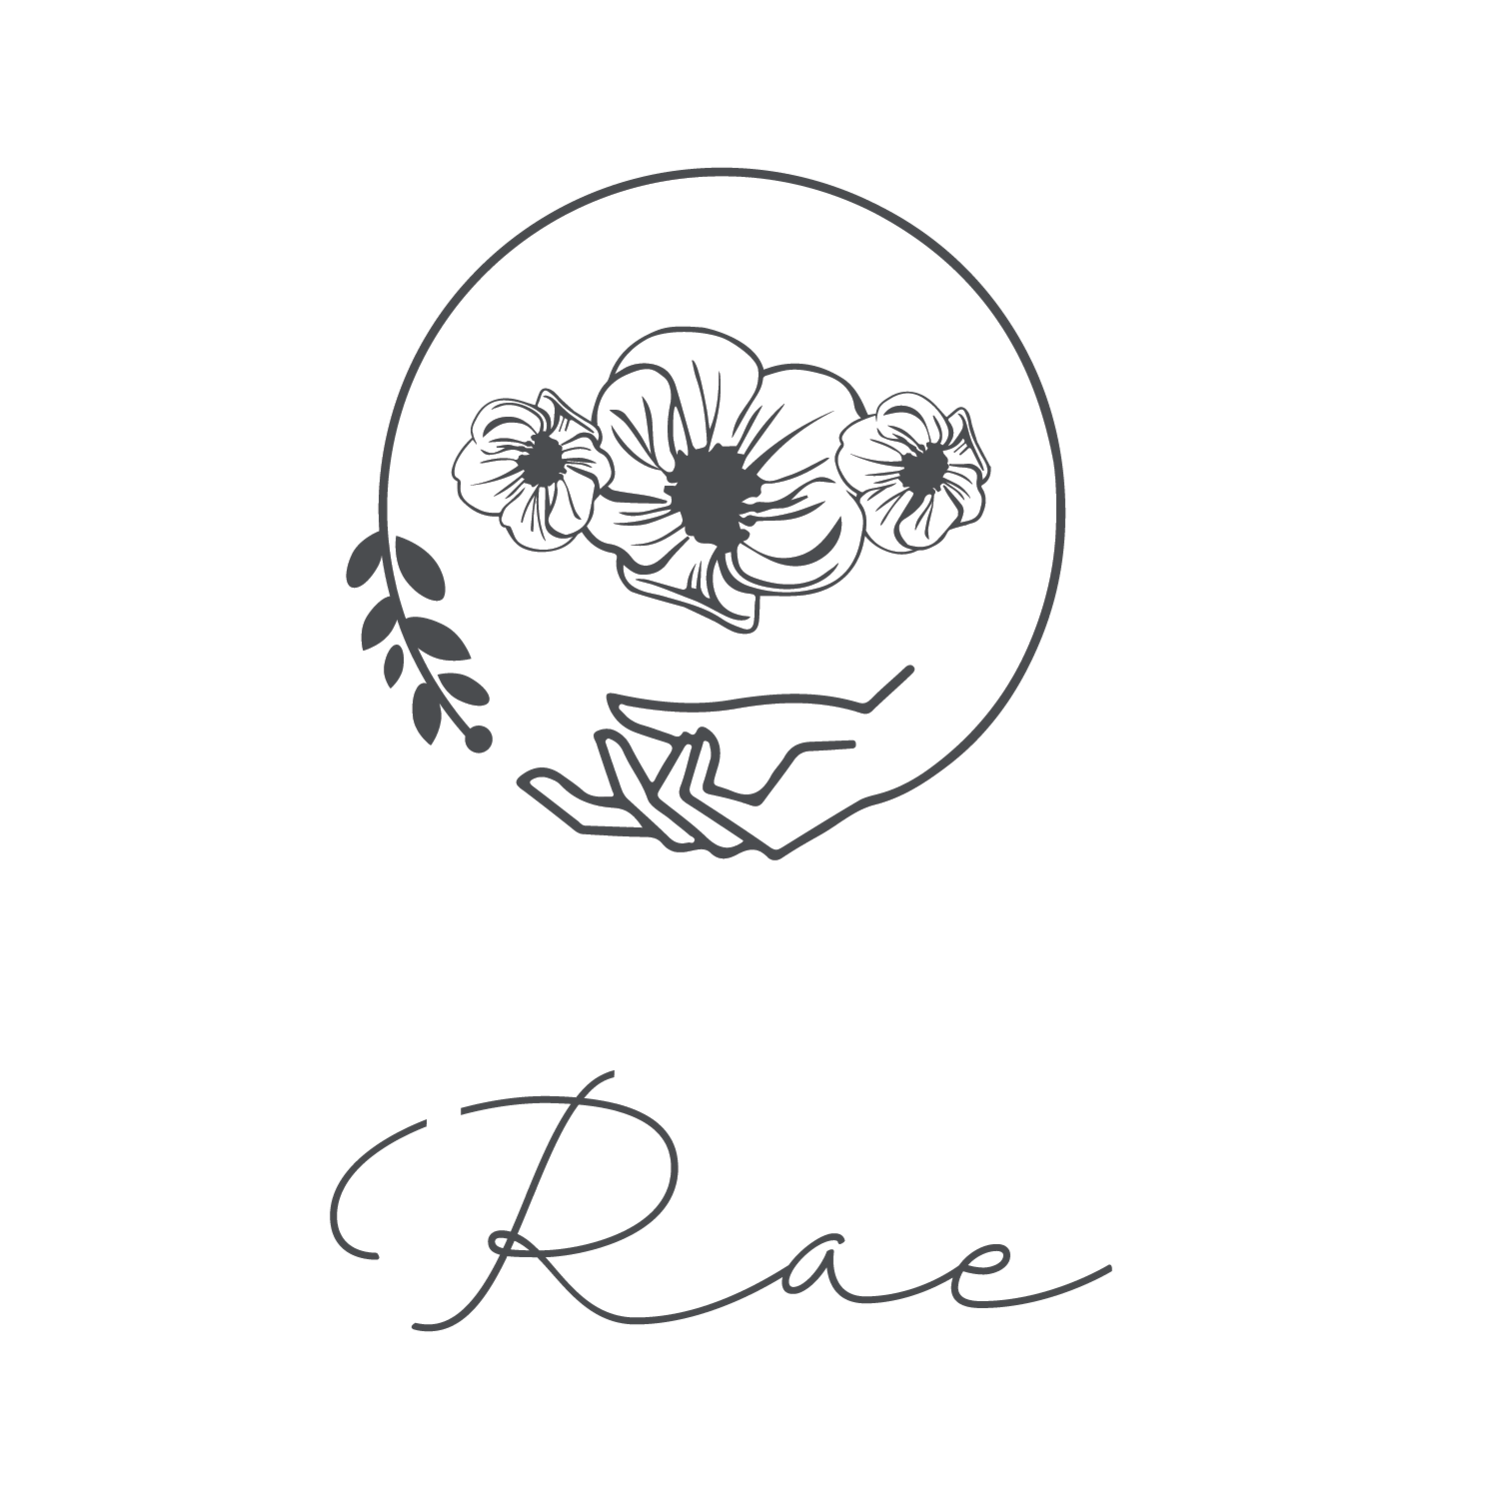 Flora Rae